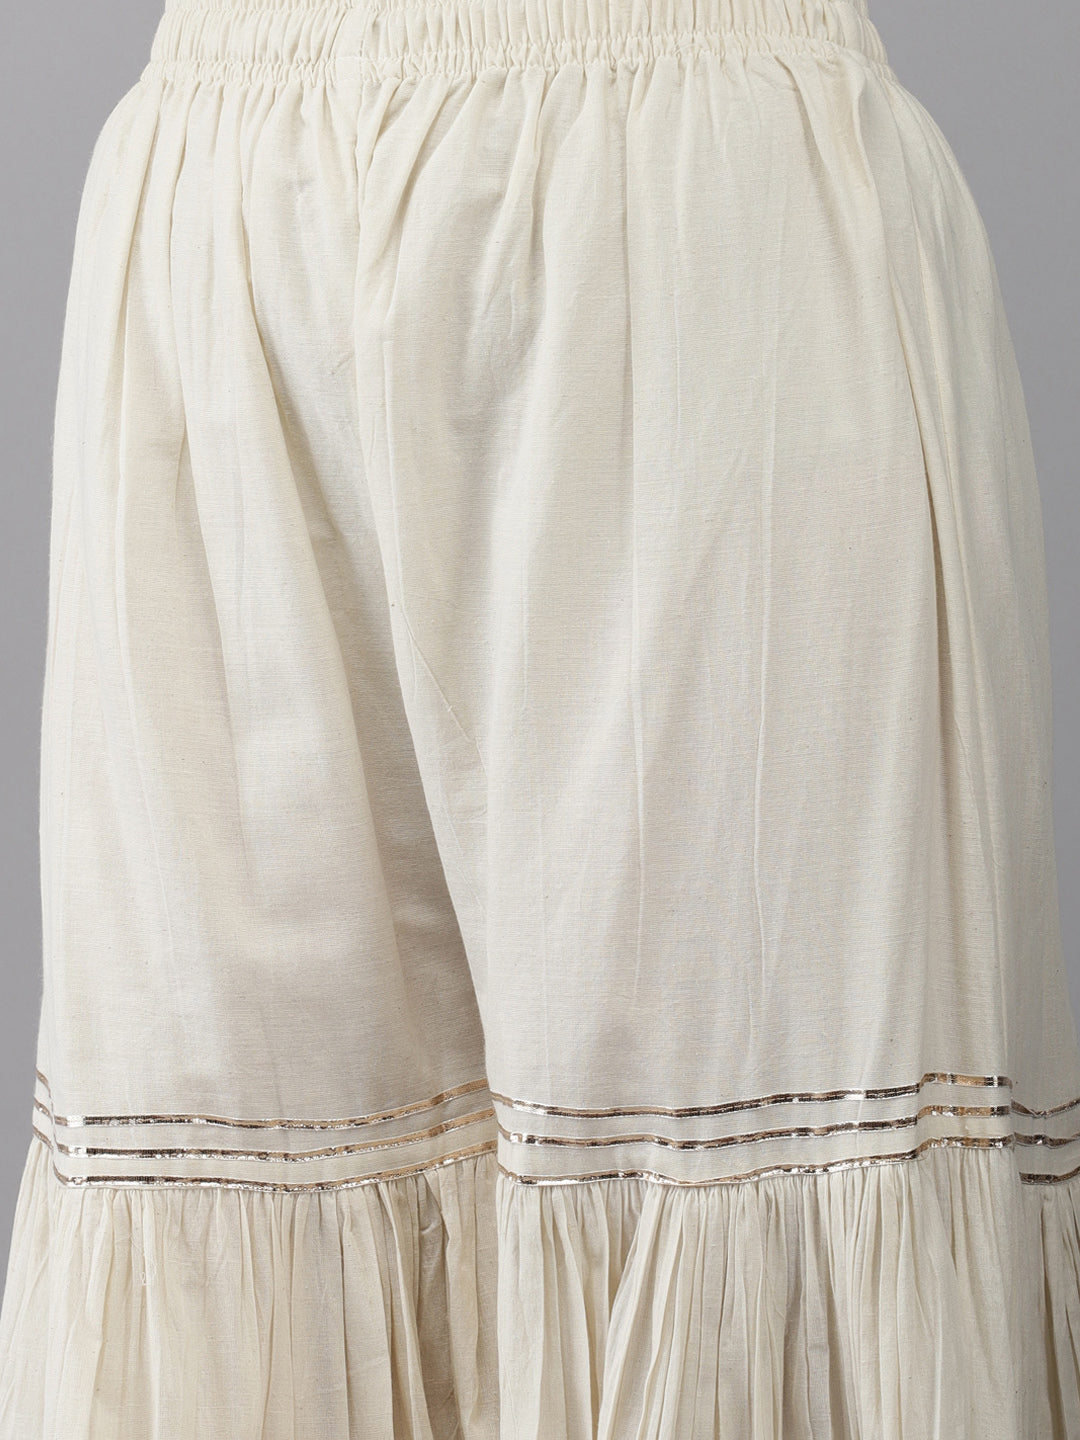 Women's Cotton Off White Embroidered A-Line Kurta Sharara Set - Navyaa